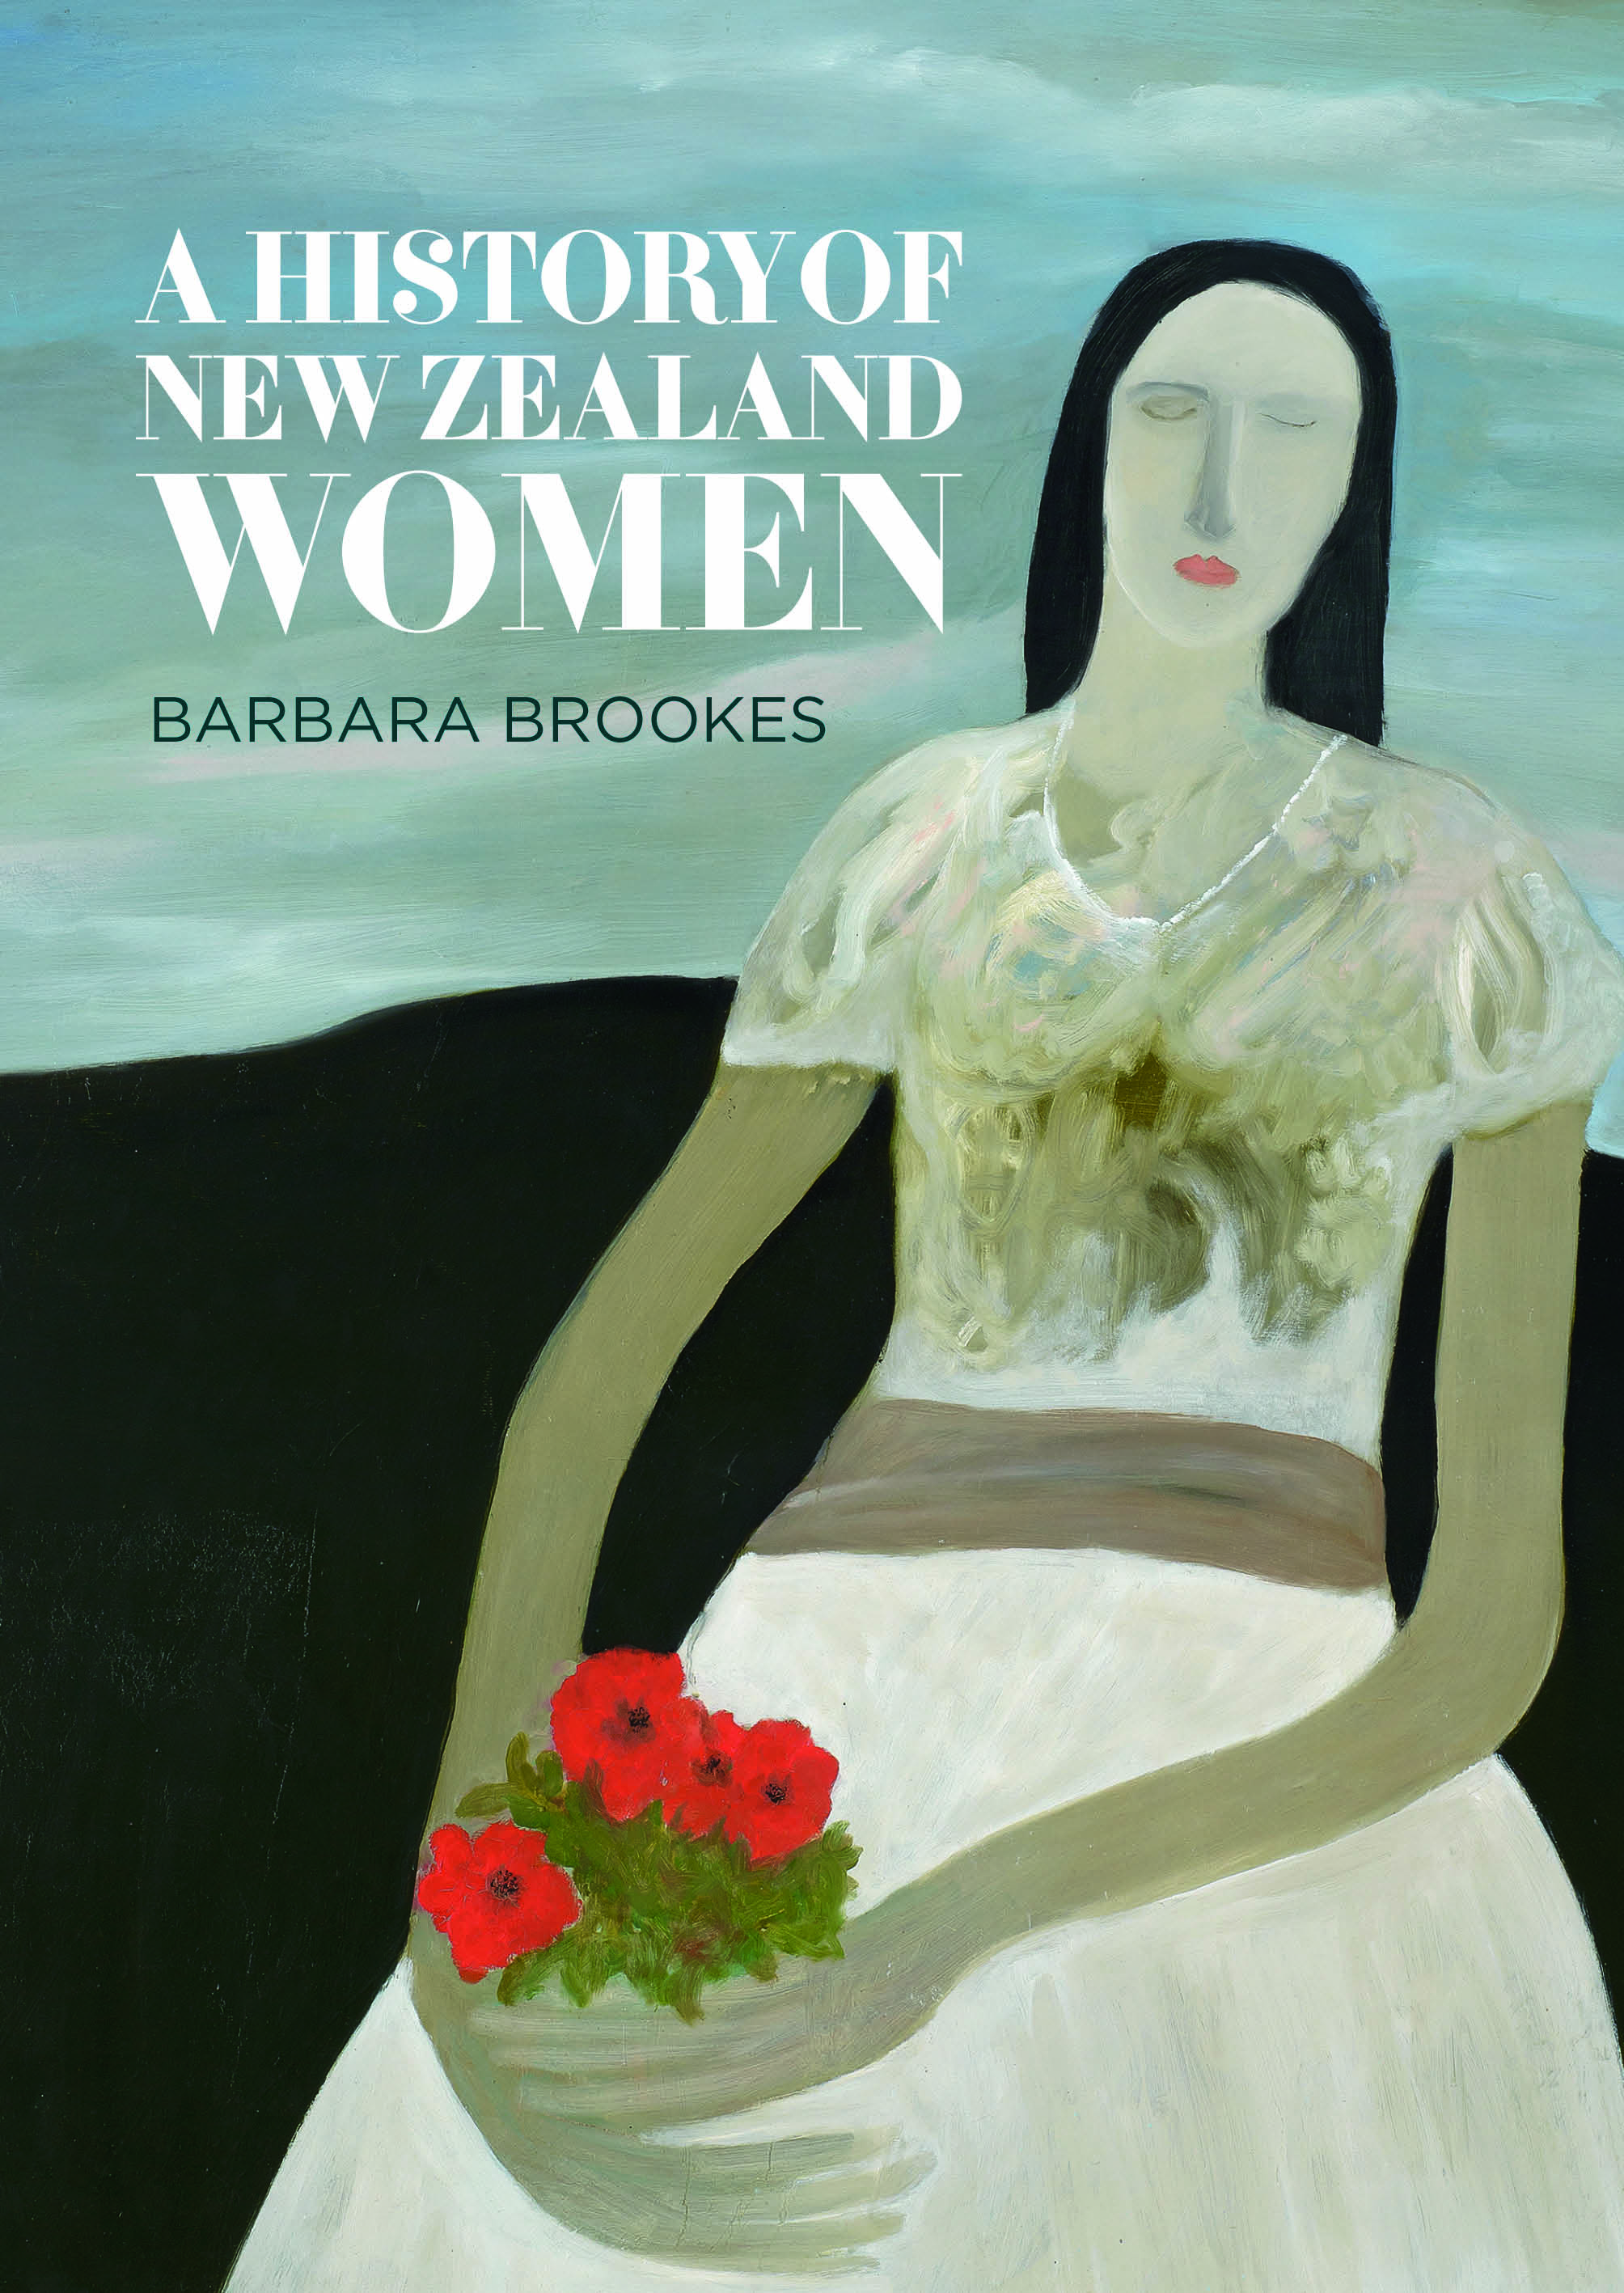 A history of New Zealand Women